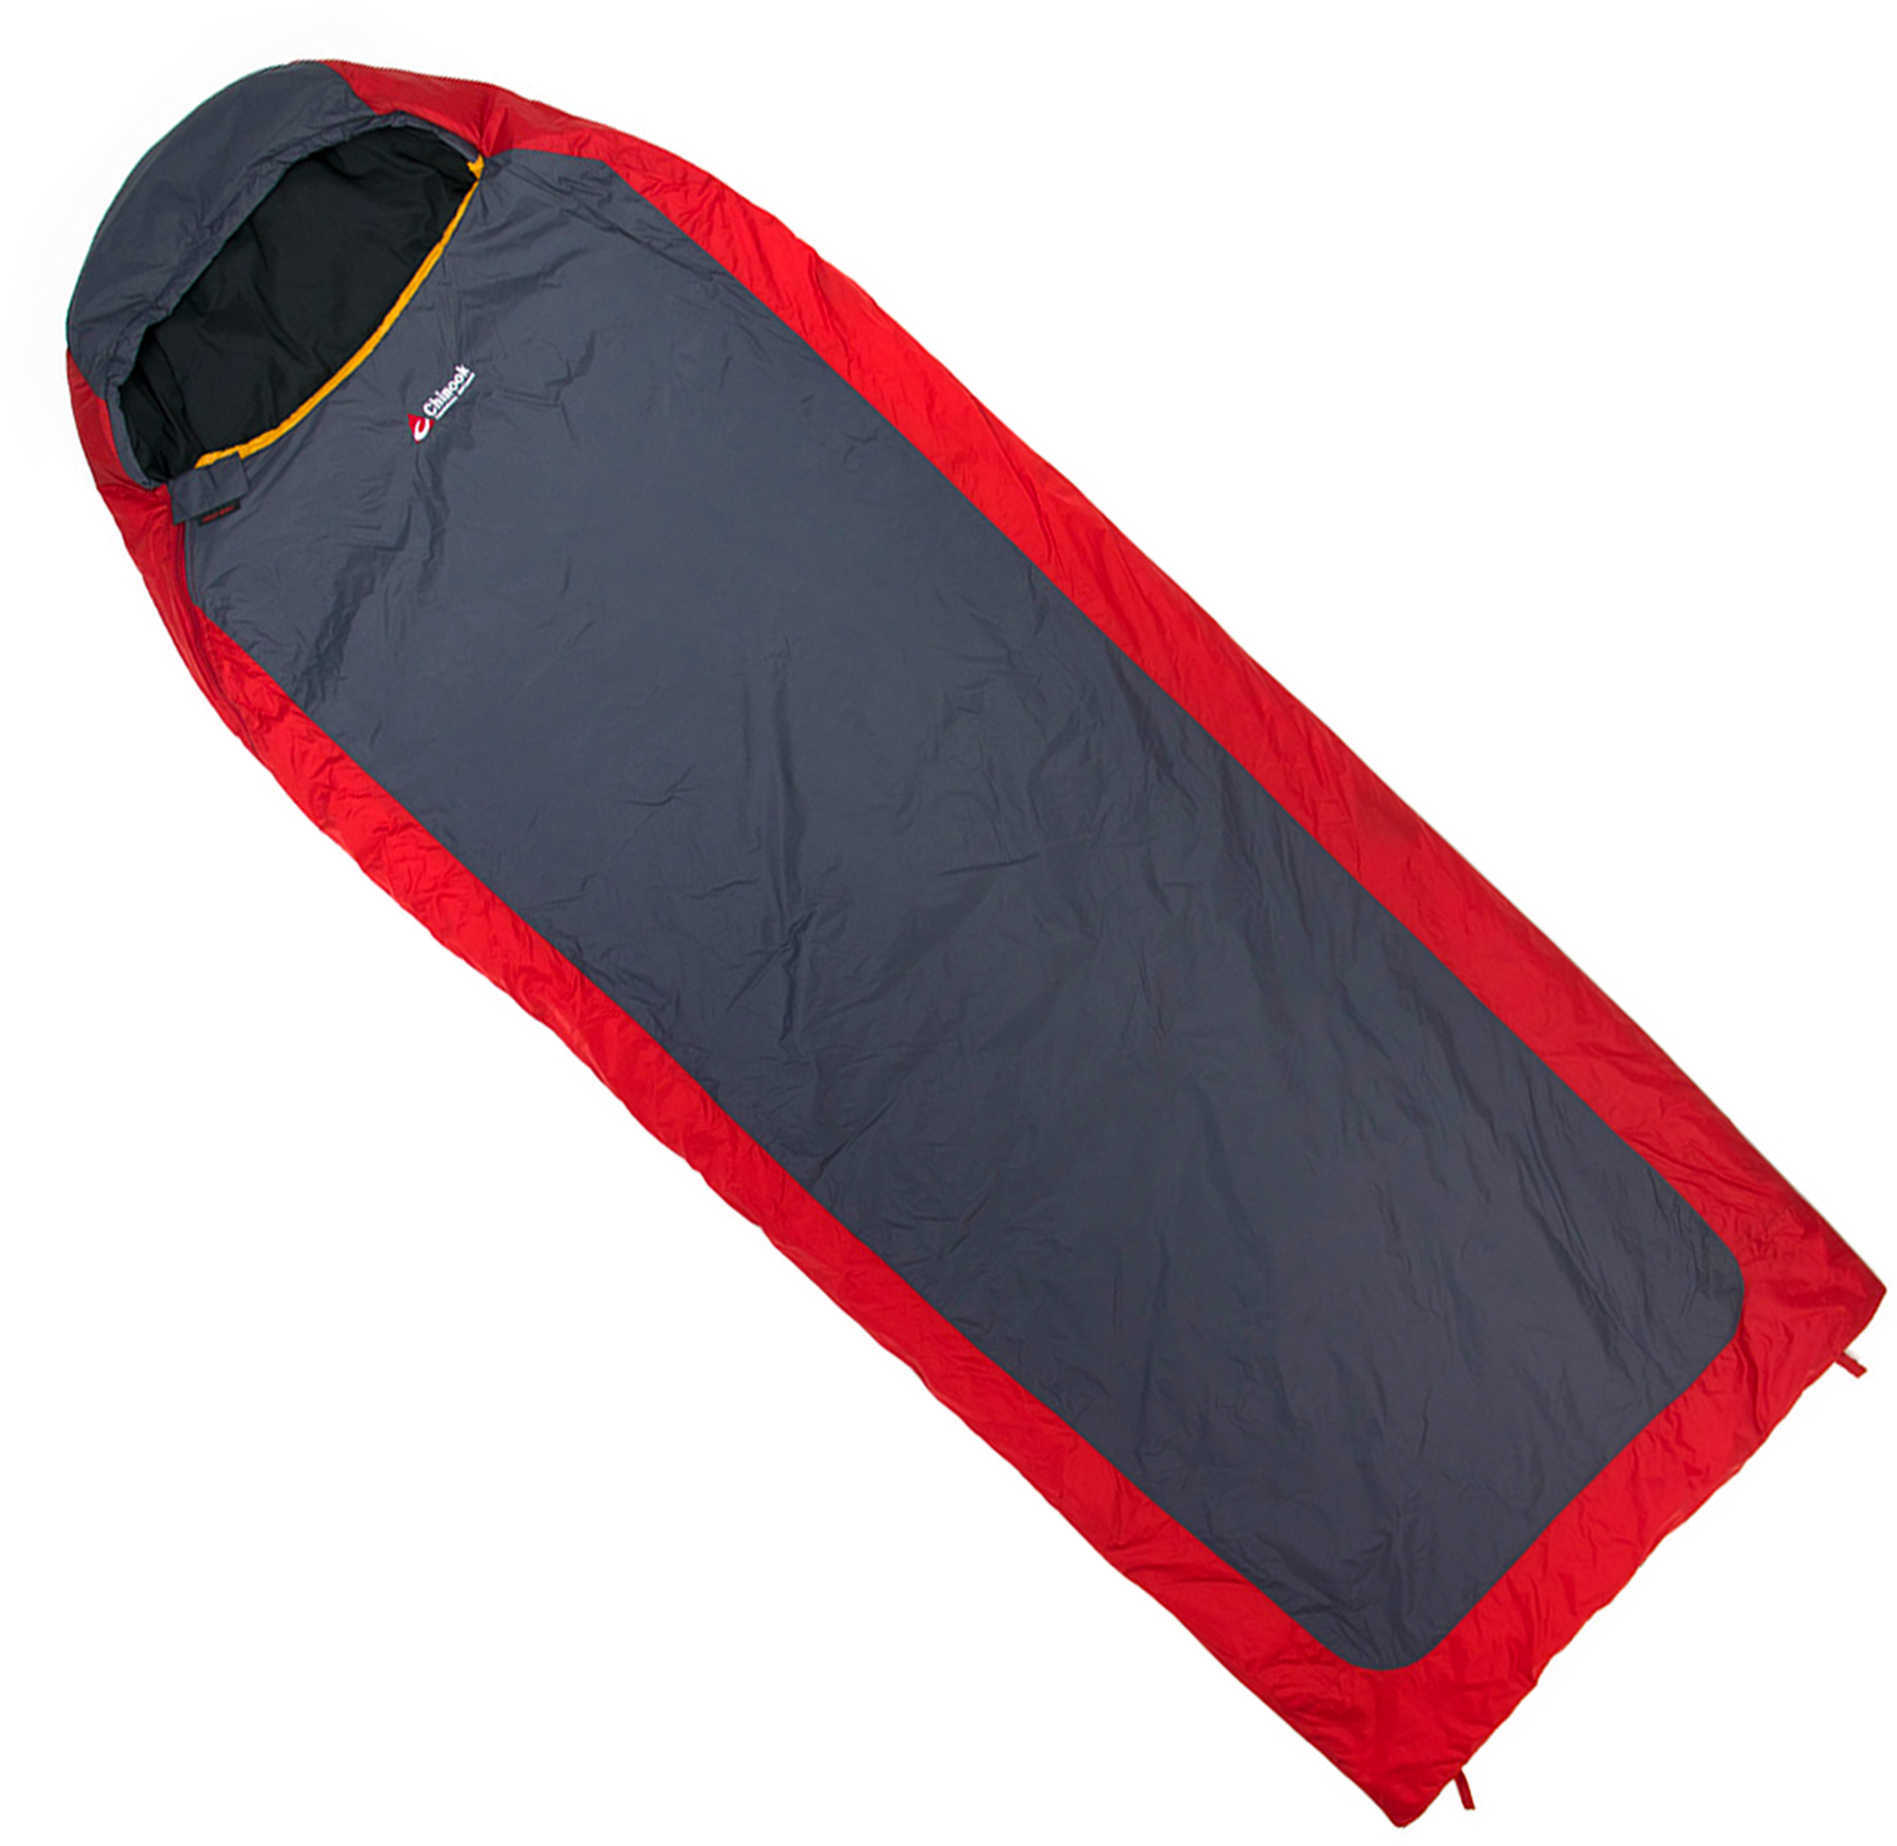 Mummy Sleeping Bag Everest Micro II 32° F, Red/Gray Md: 20631